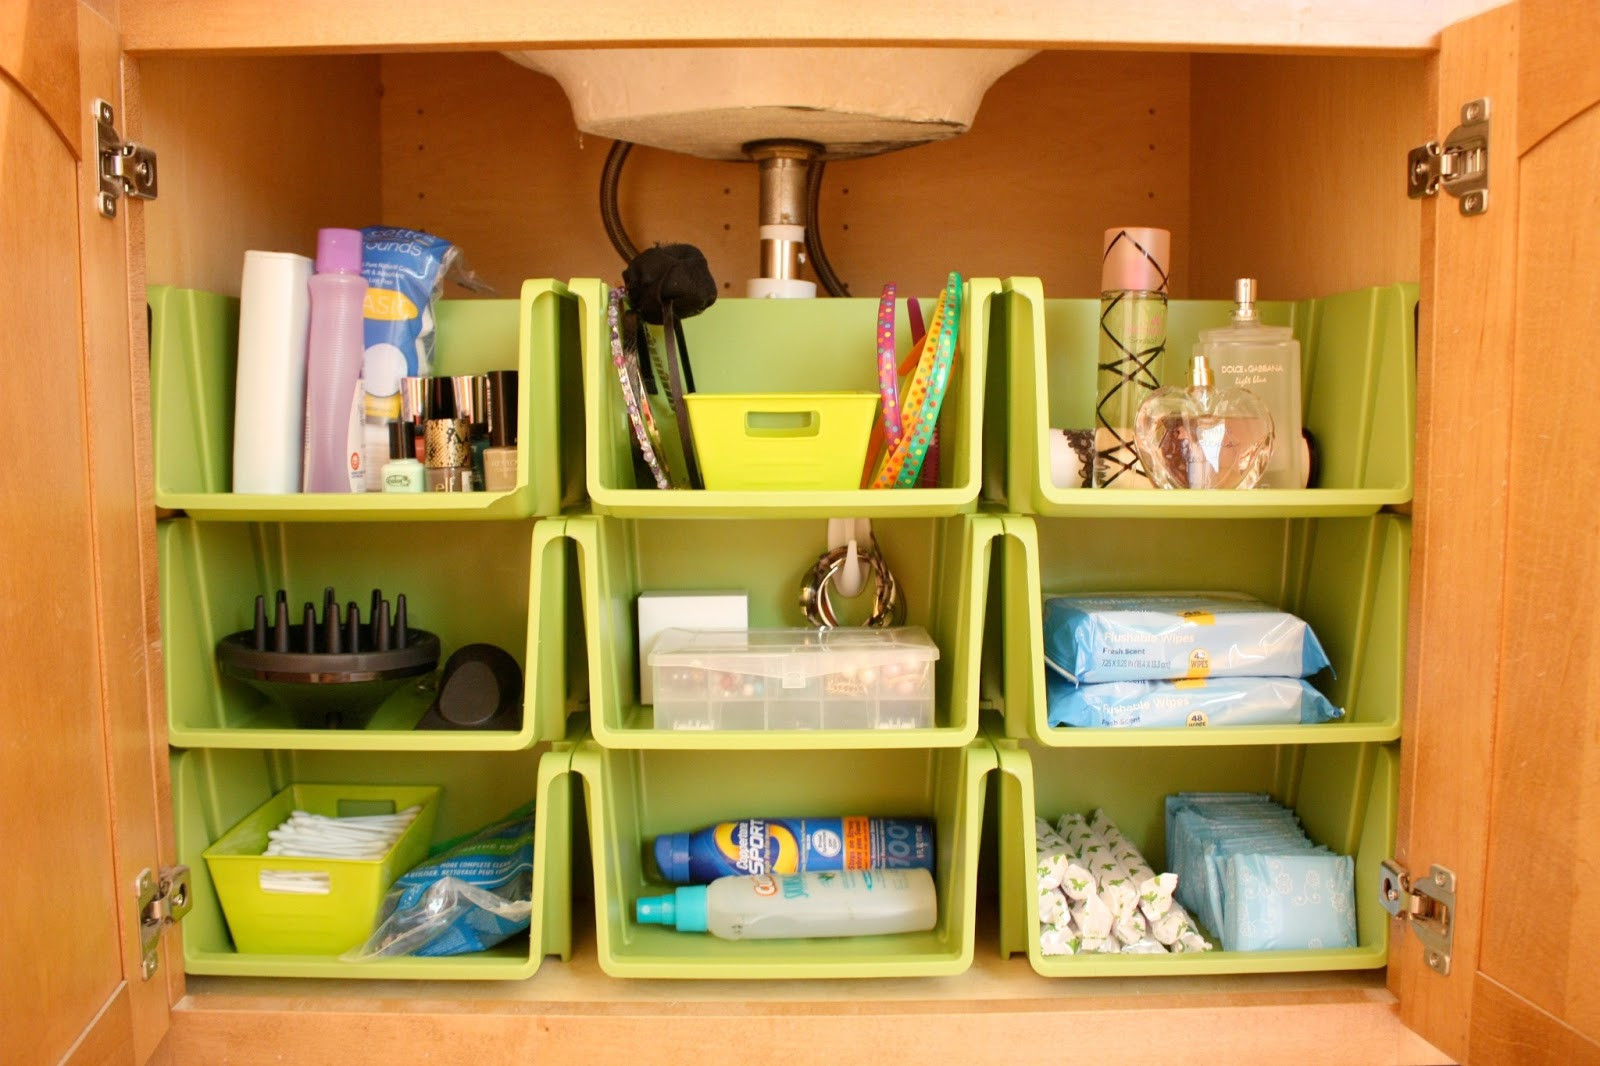 Bathroom Storage Cabinet Ideas
 The Orderly Home Bathroom Cabinet Organization